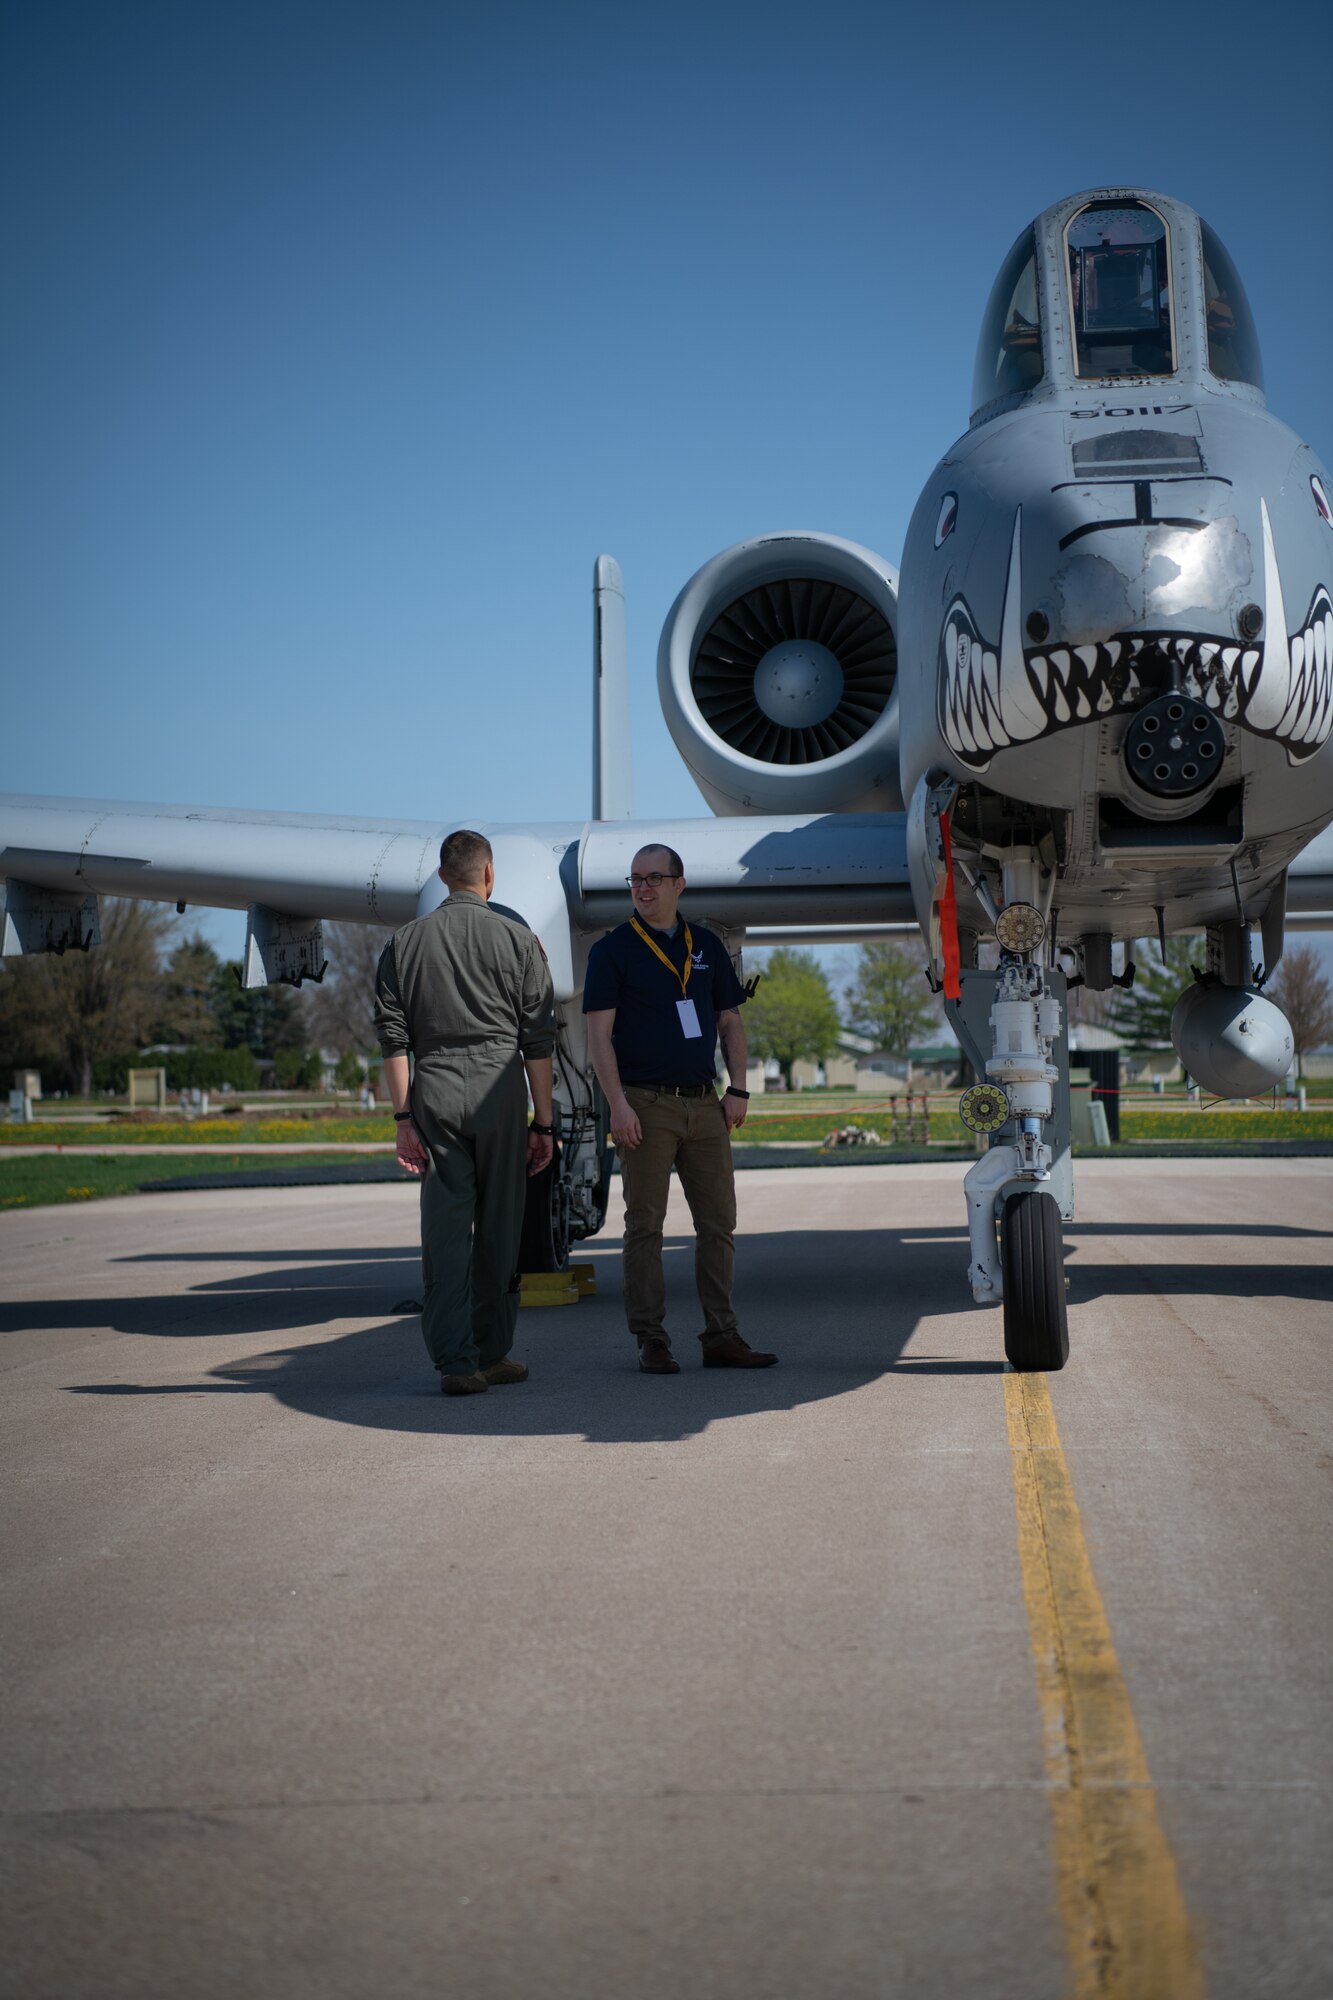 Two Airmen conduct a tour of an A-10 "Warthog" aircraft